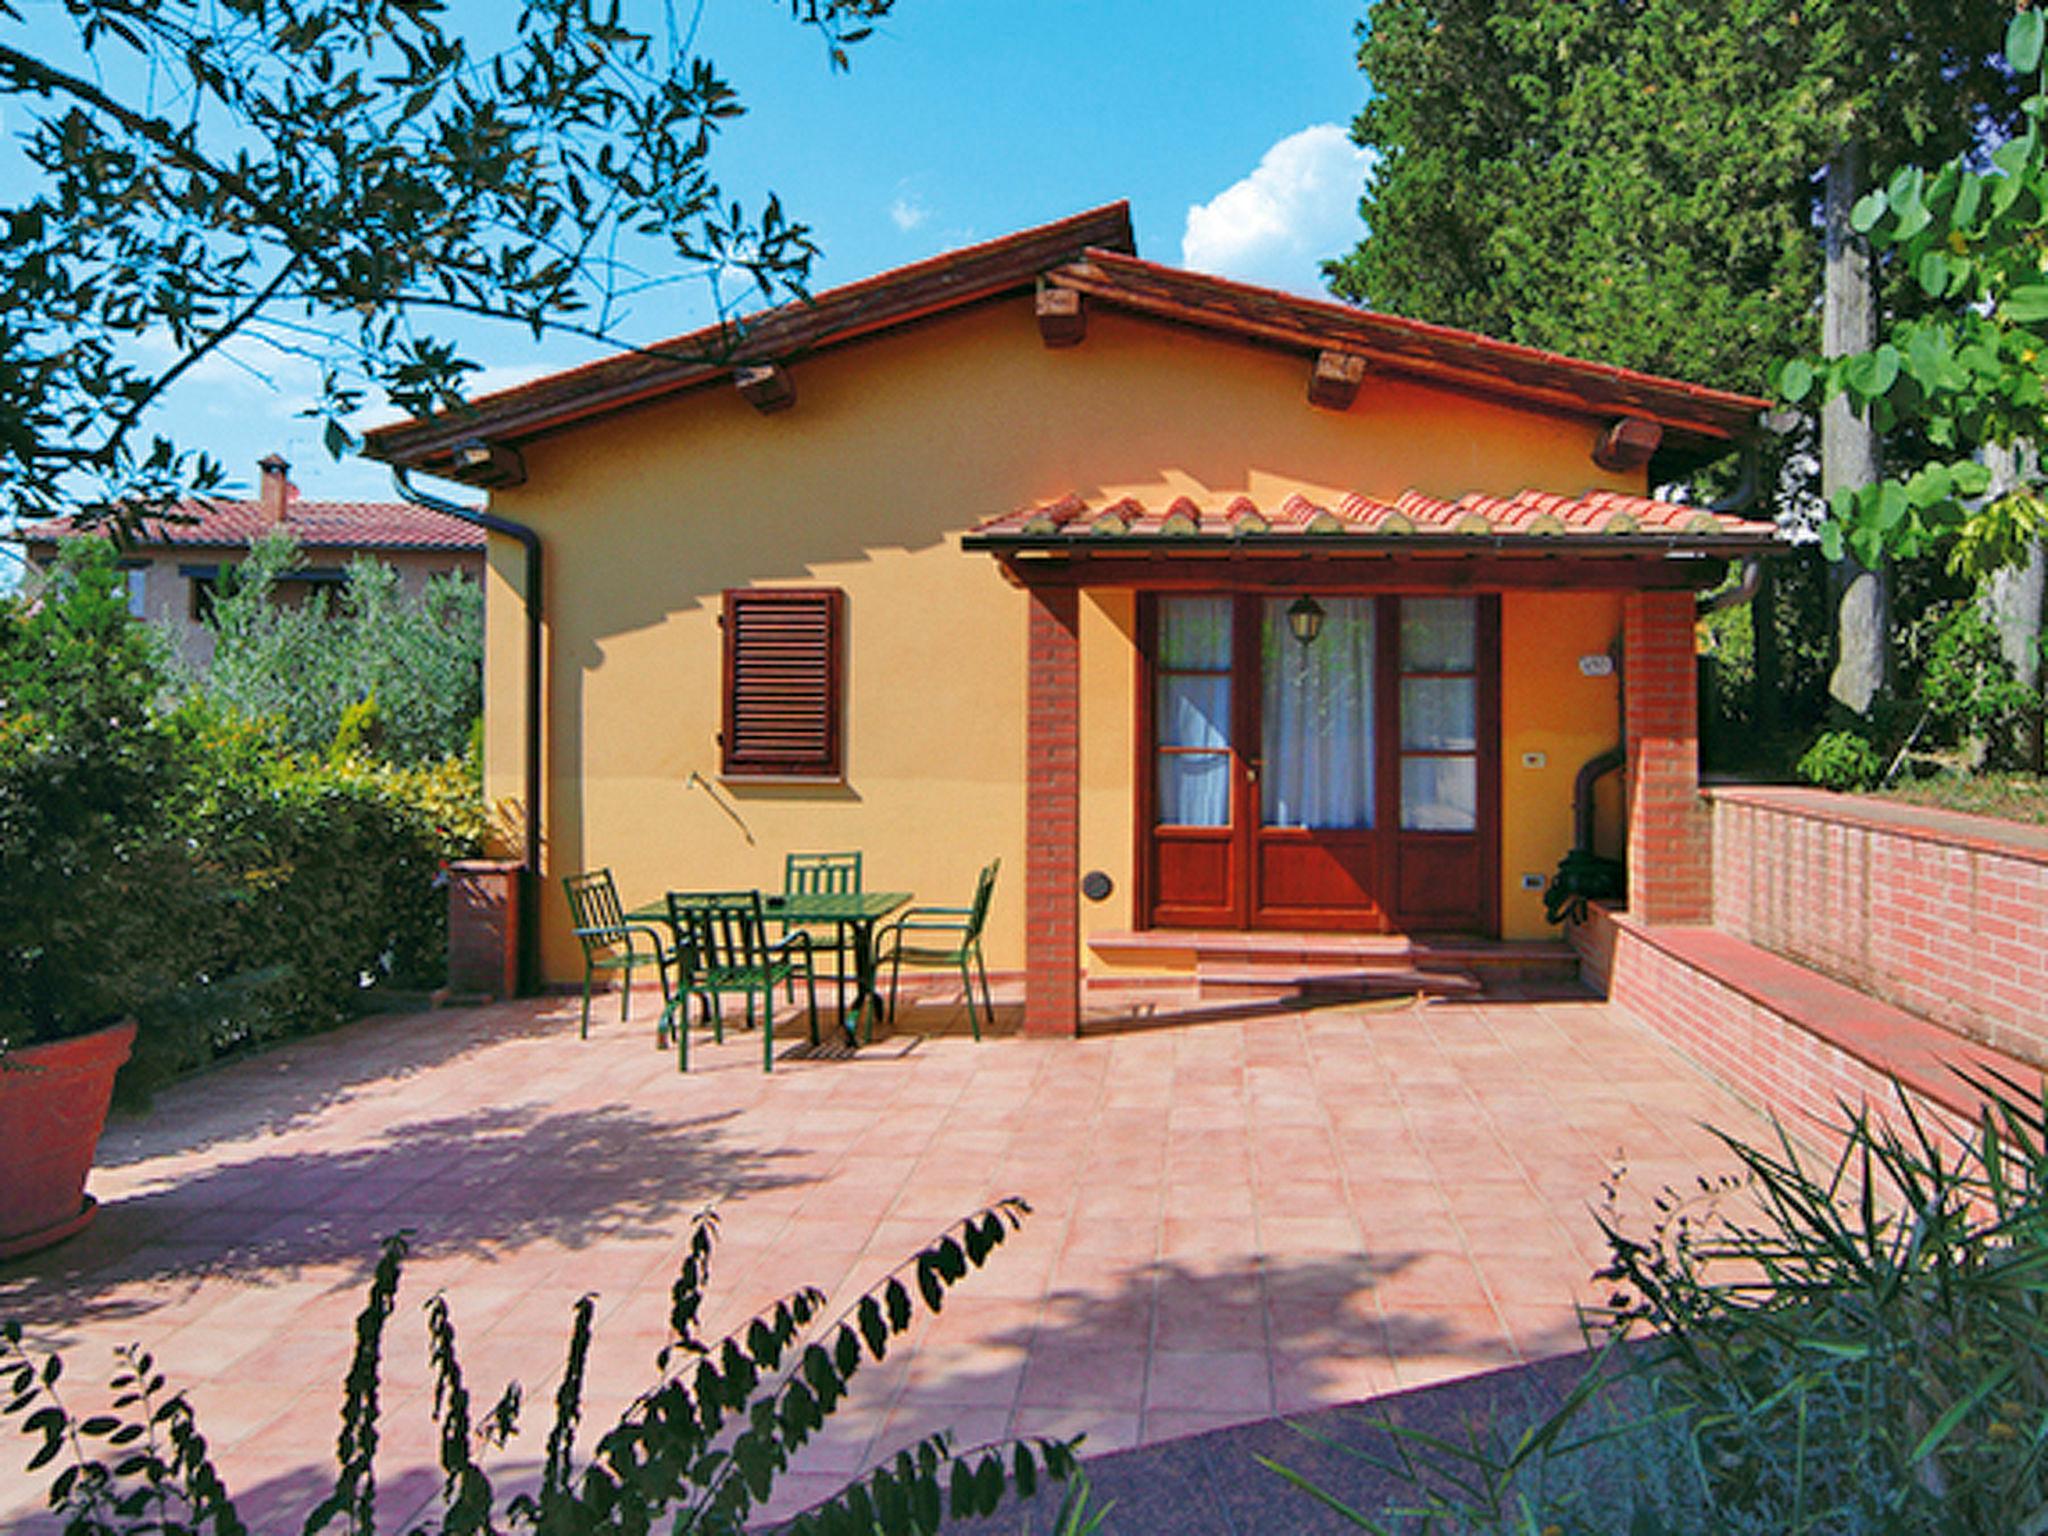 Foto 1 - Casa con 1 camera da letto a Certaldo con piscina e giardino